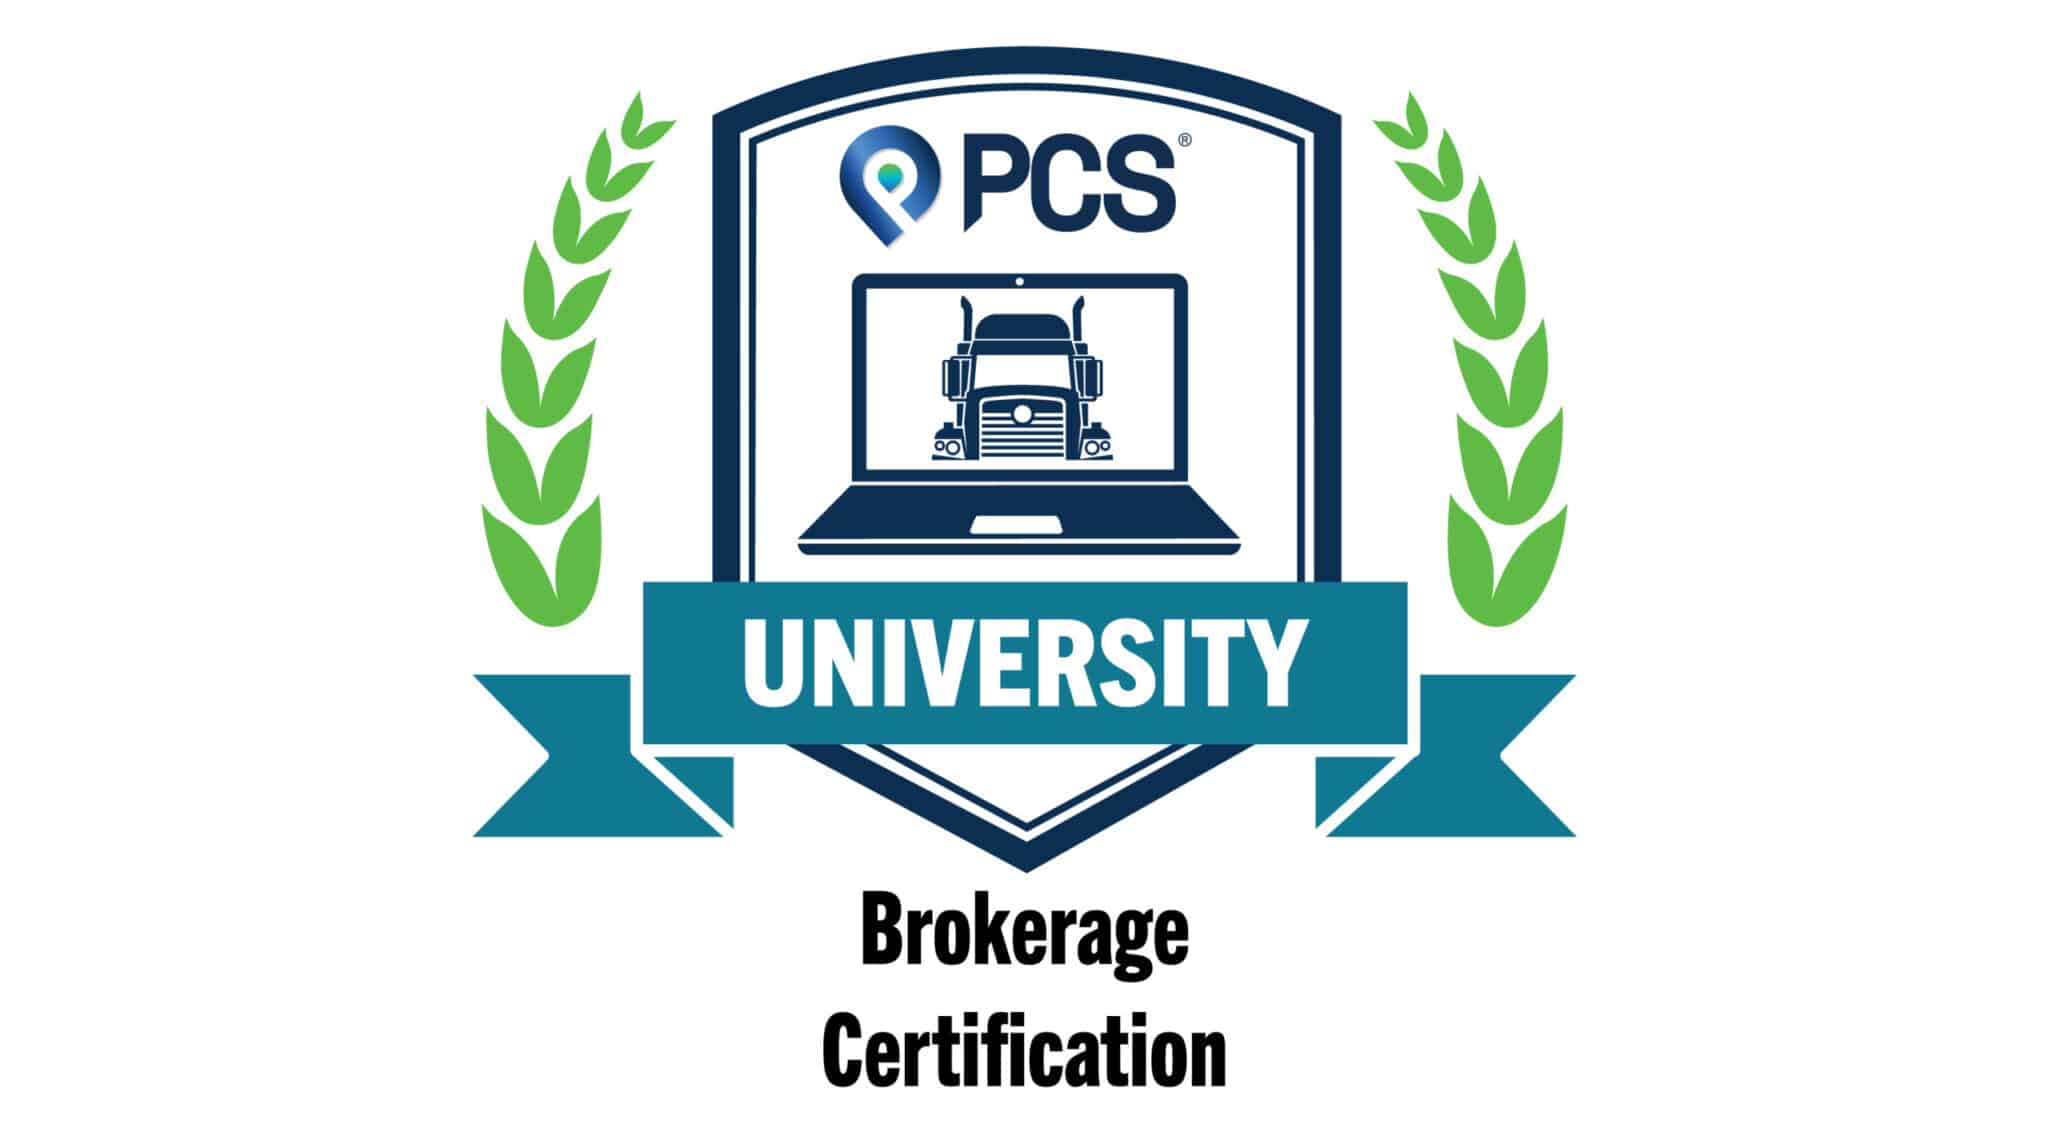 PCS University - Brokerage